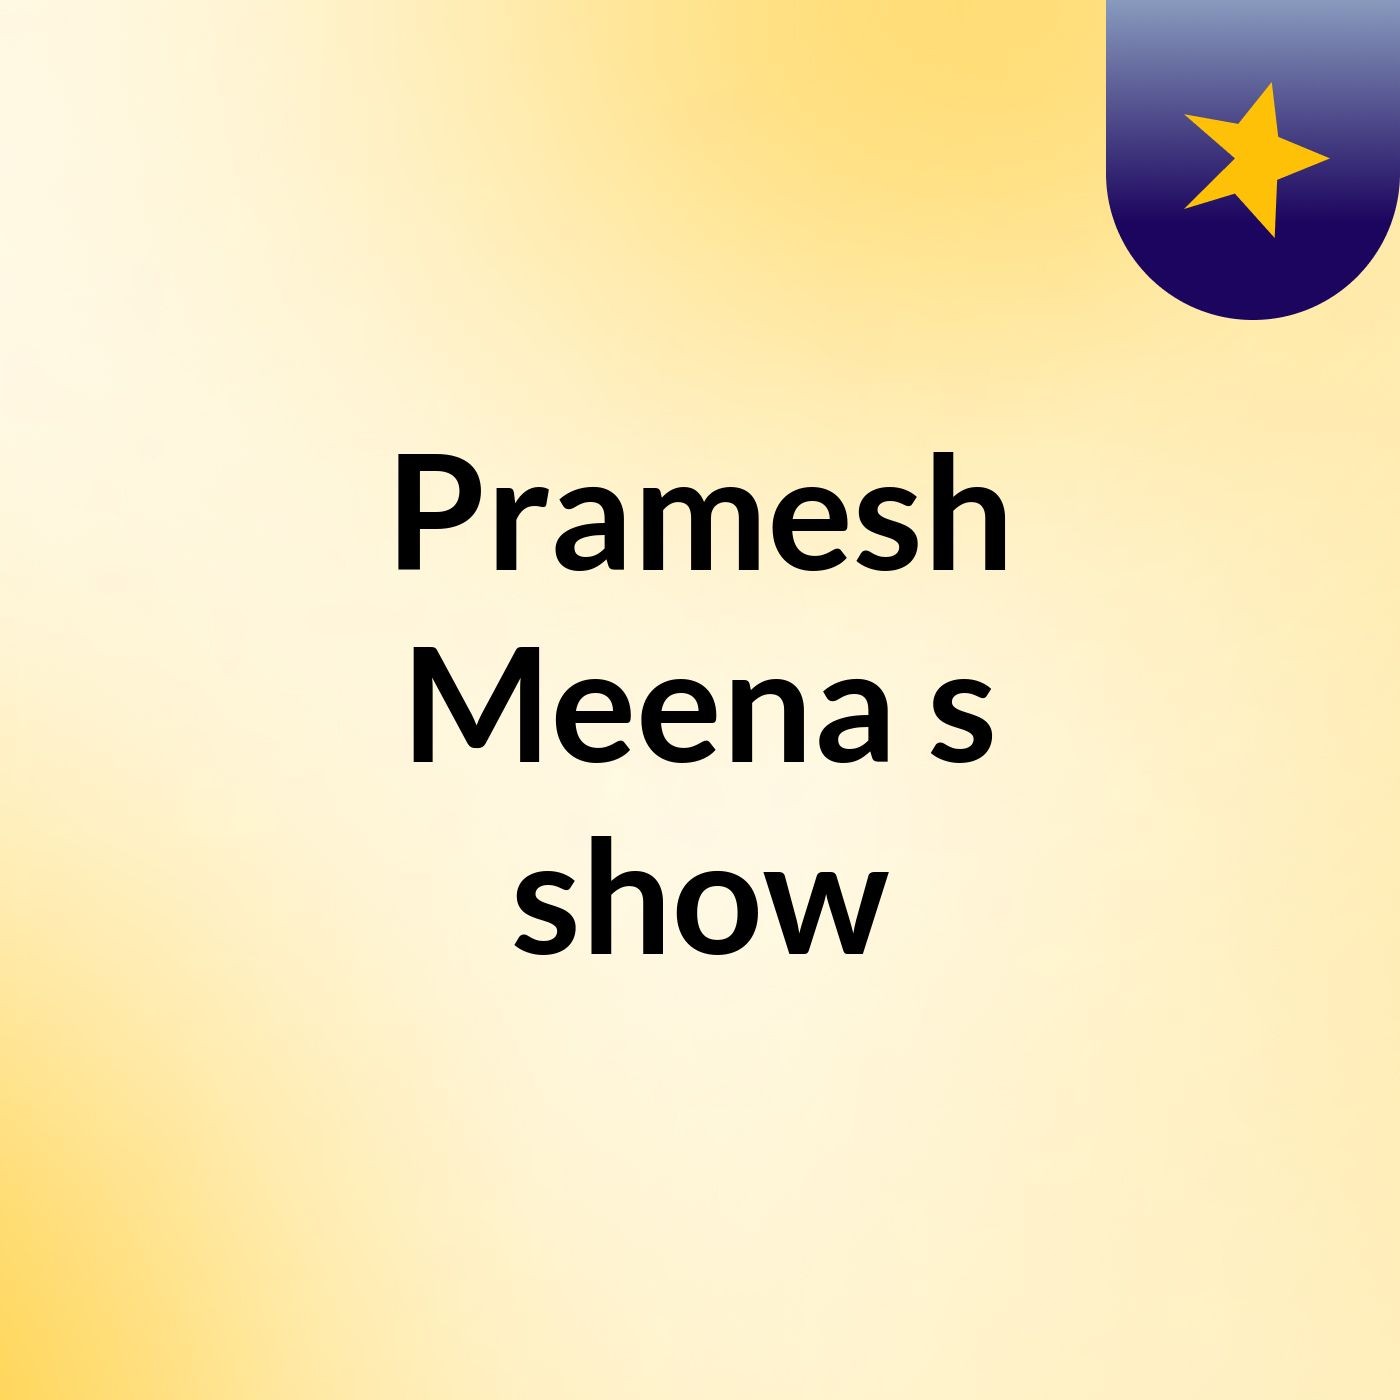 Pramesh Meena's show